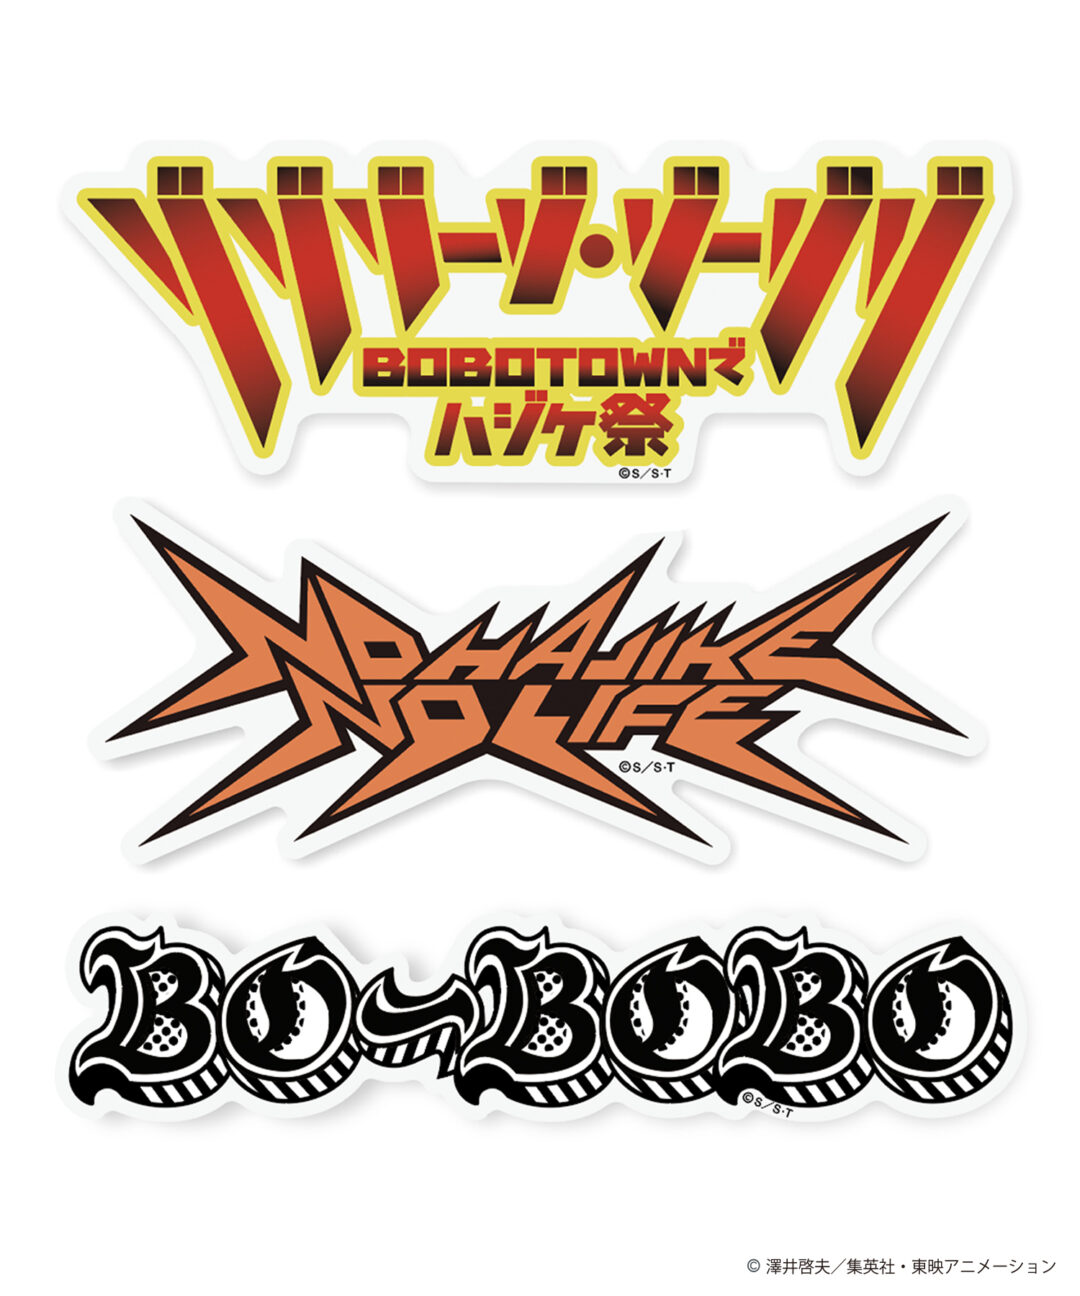 TVアニメ「ボボボーボ・ボーボボ」× ZOZOTOWN コラボコレクションが11/24から受注 (bo-bobo ゾゾタウン)